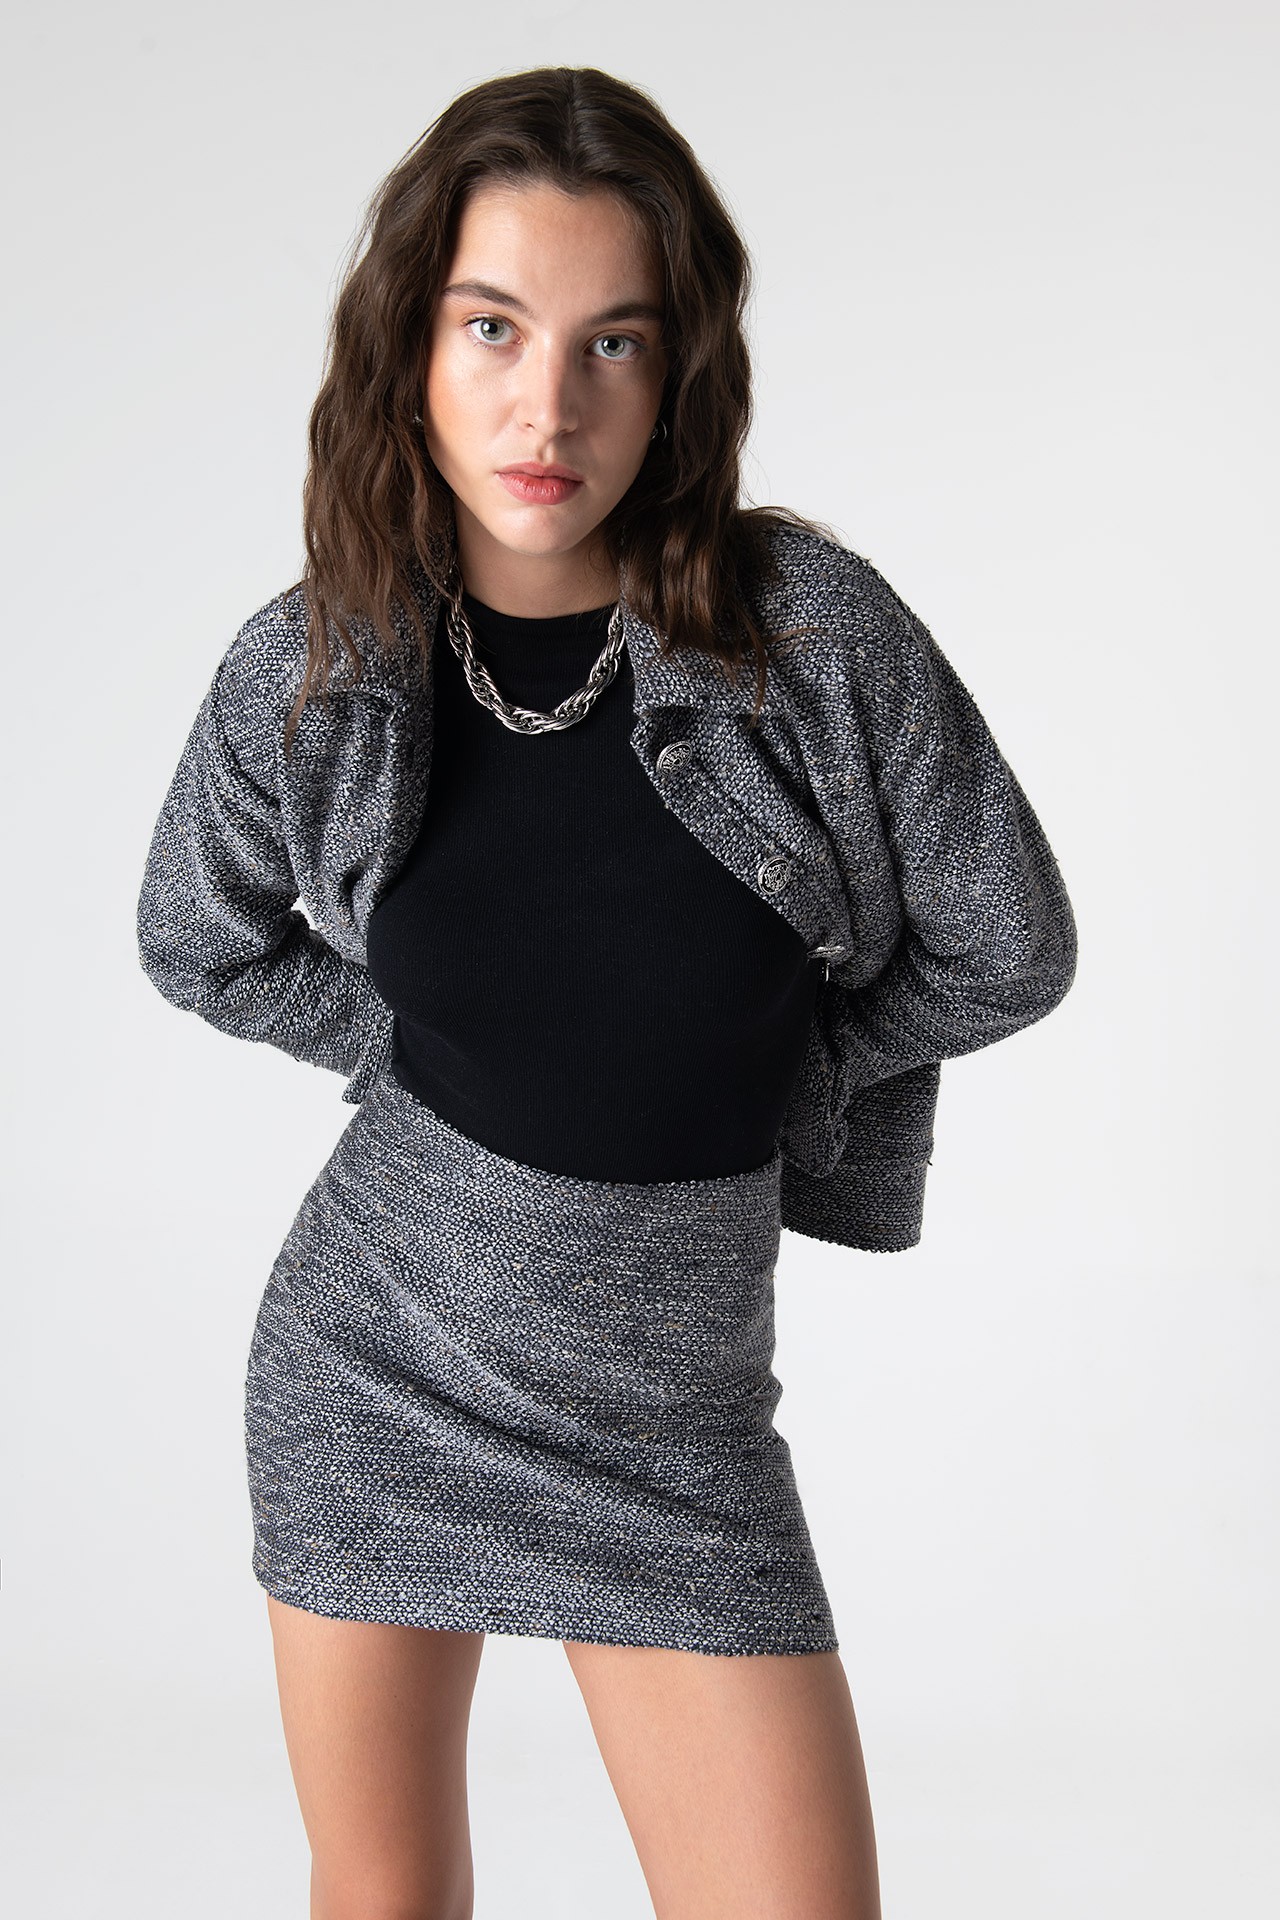 Carleen Textured Weaving Skirt - Anthracite Grey